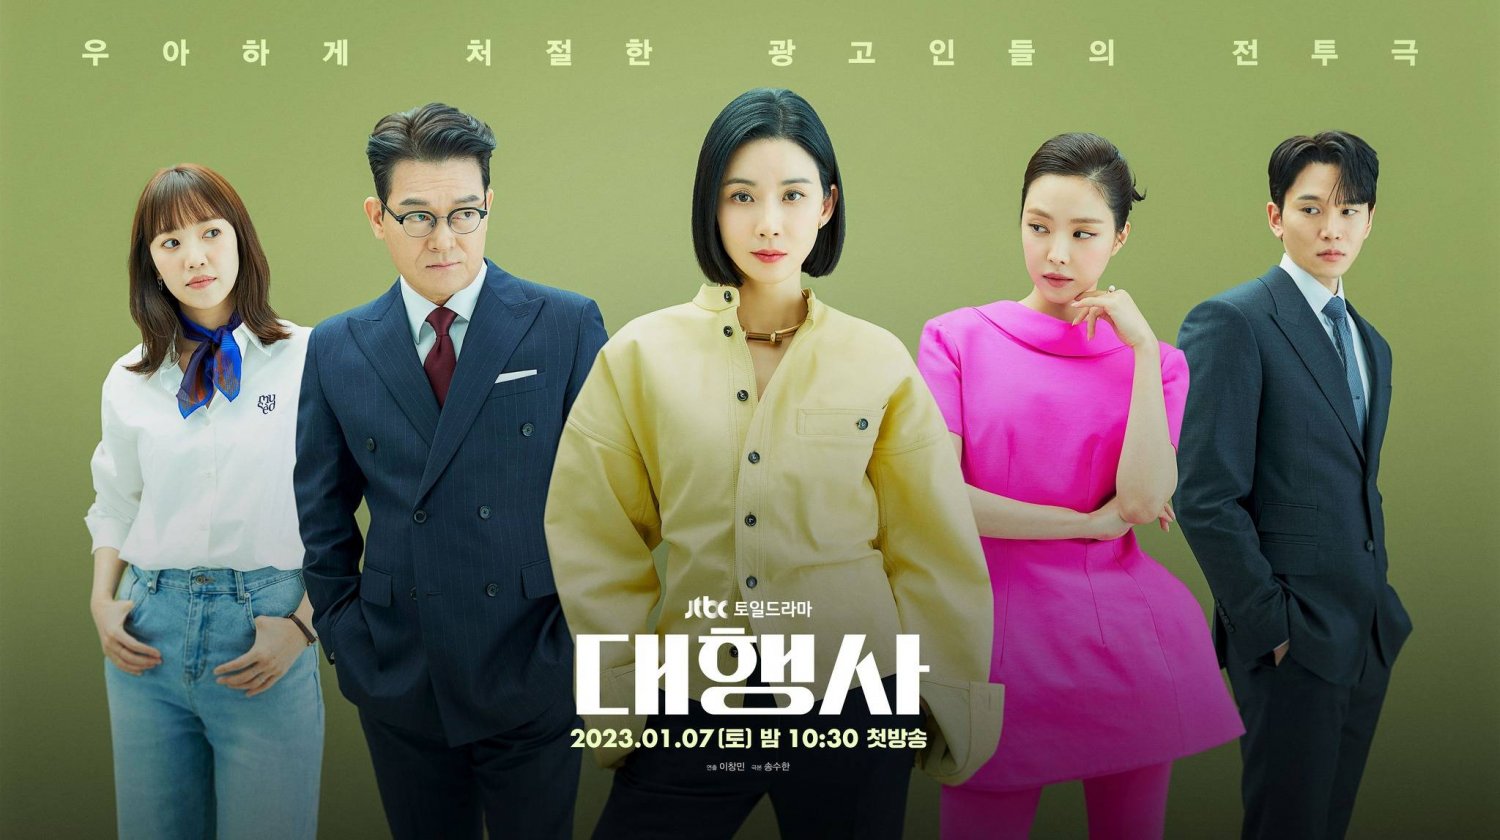 [Photo] New Poster Added for the Korean Drama 'Agency' HanCinema